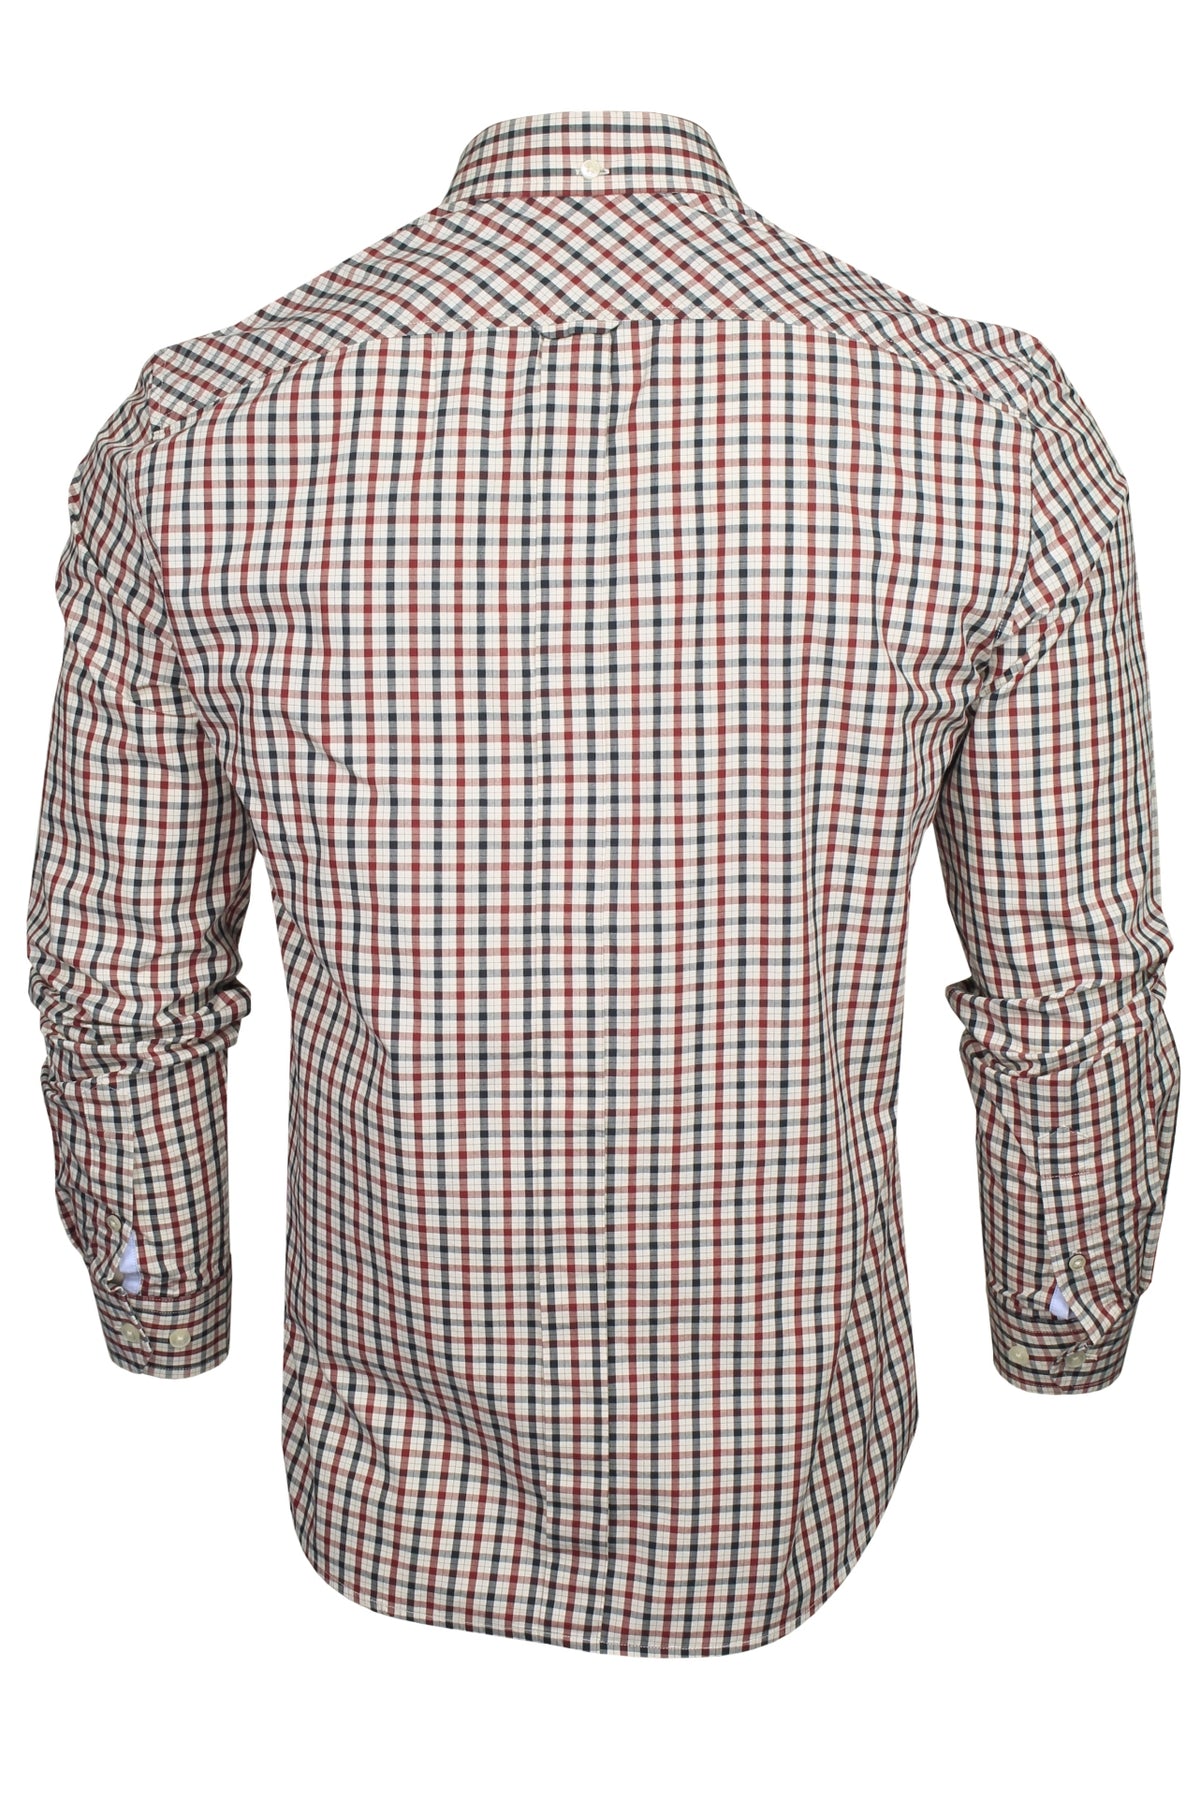 Ben Sherman Men's Signature Pocket House Check Shirt, Long Sleeved, 03, 48578, House Check - Red